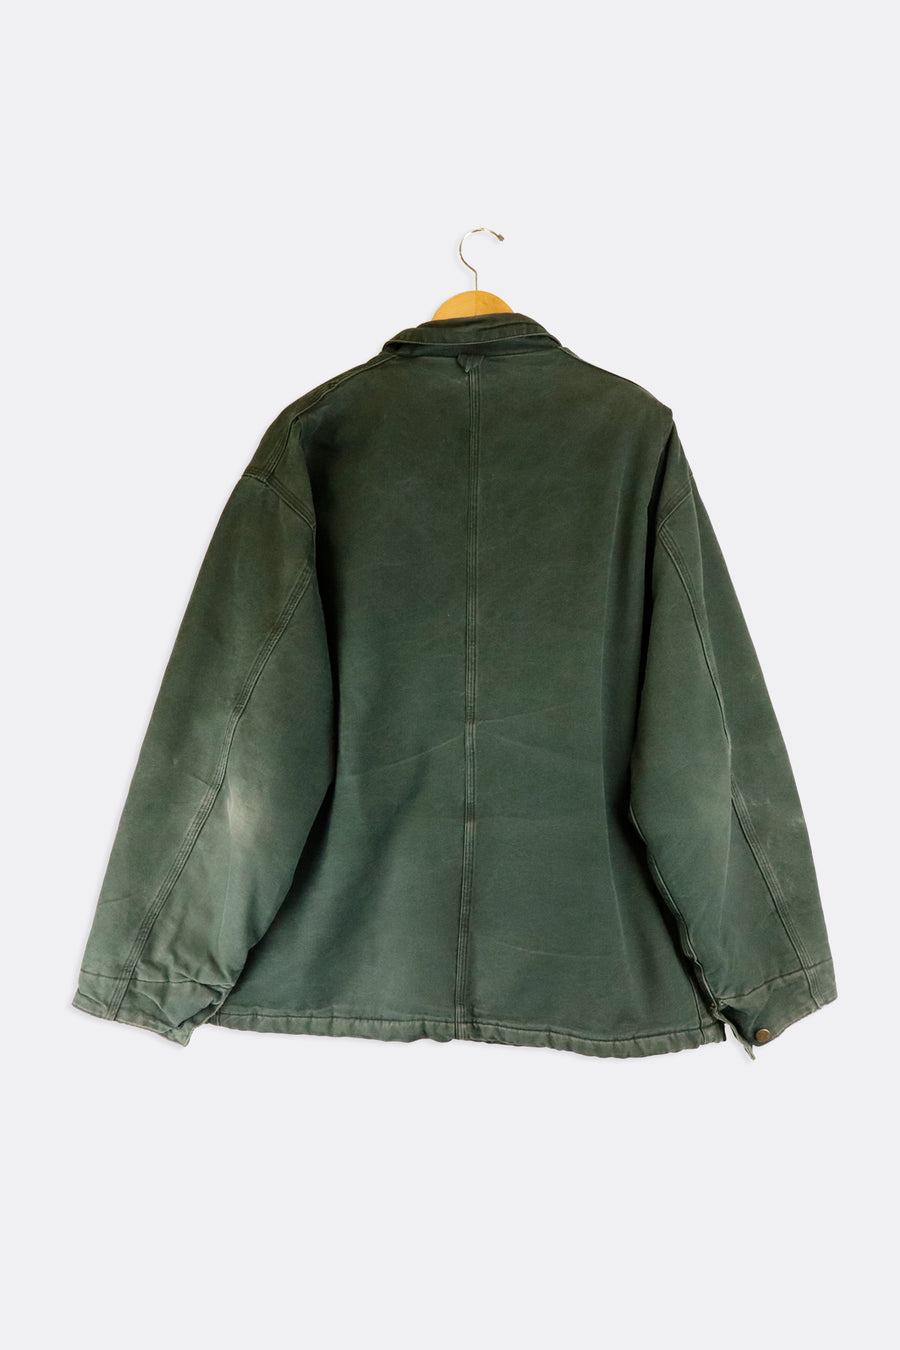 Vintage Carhartt Blanket Lined Chore Green Denim Collared Jacket Sz 2XL